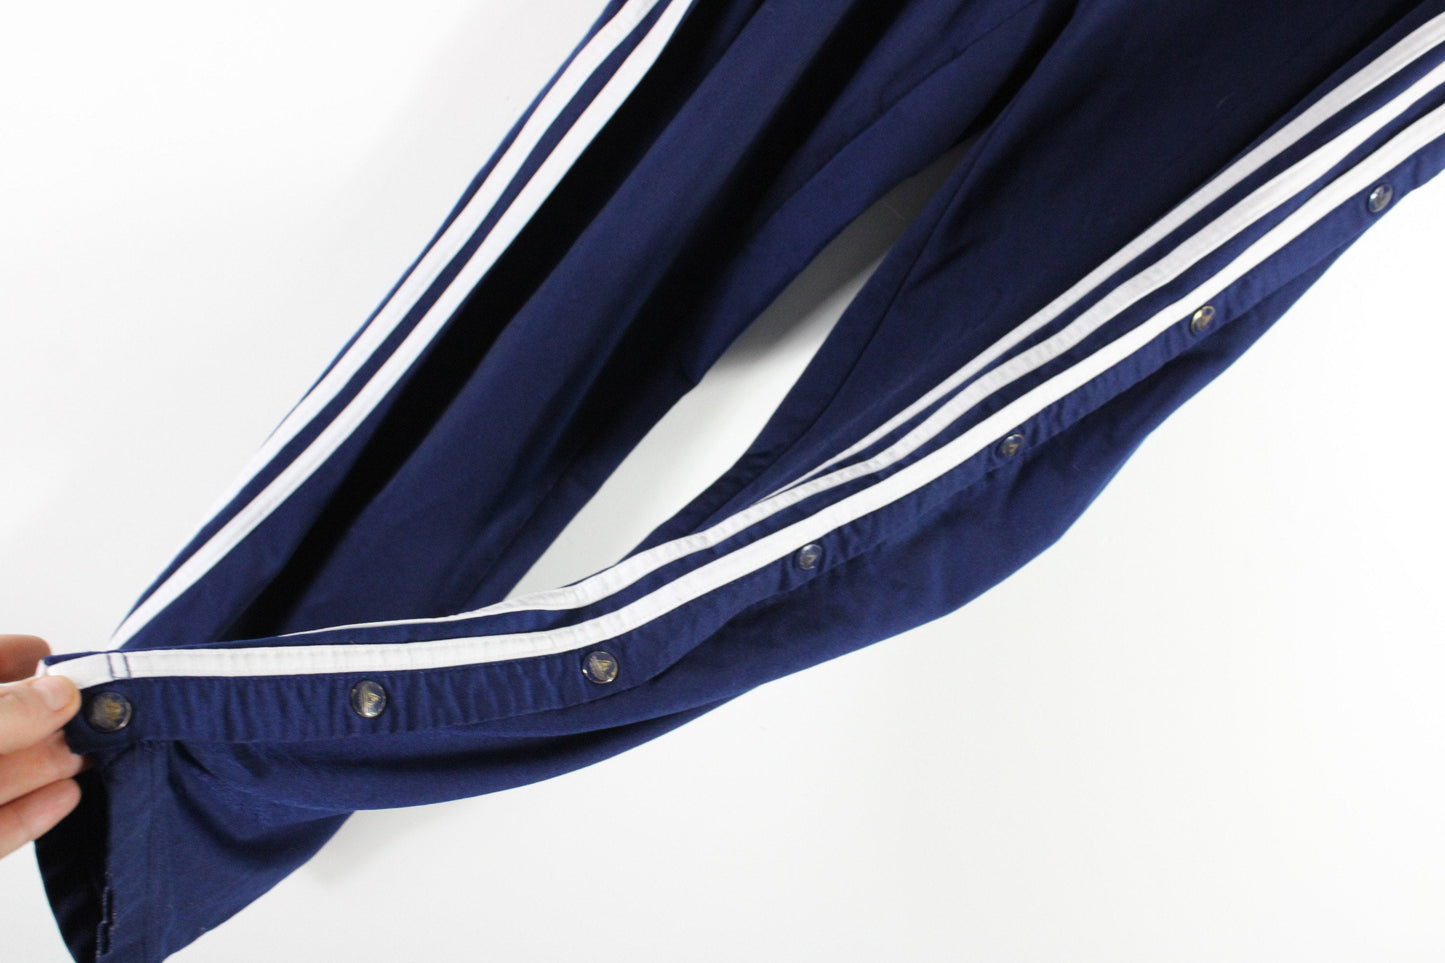 Adidas Track Pants / Windbreaker Tearaways Style Joggers / Stripe Logo / 70s Streetwear / Vintage Hip Hop Clothing / Blue